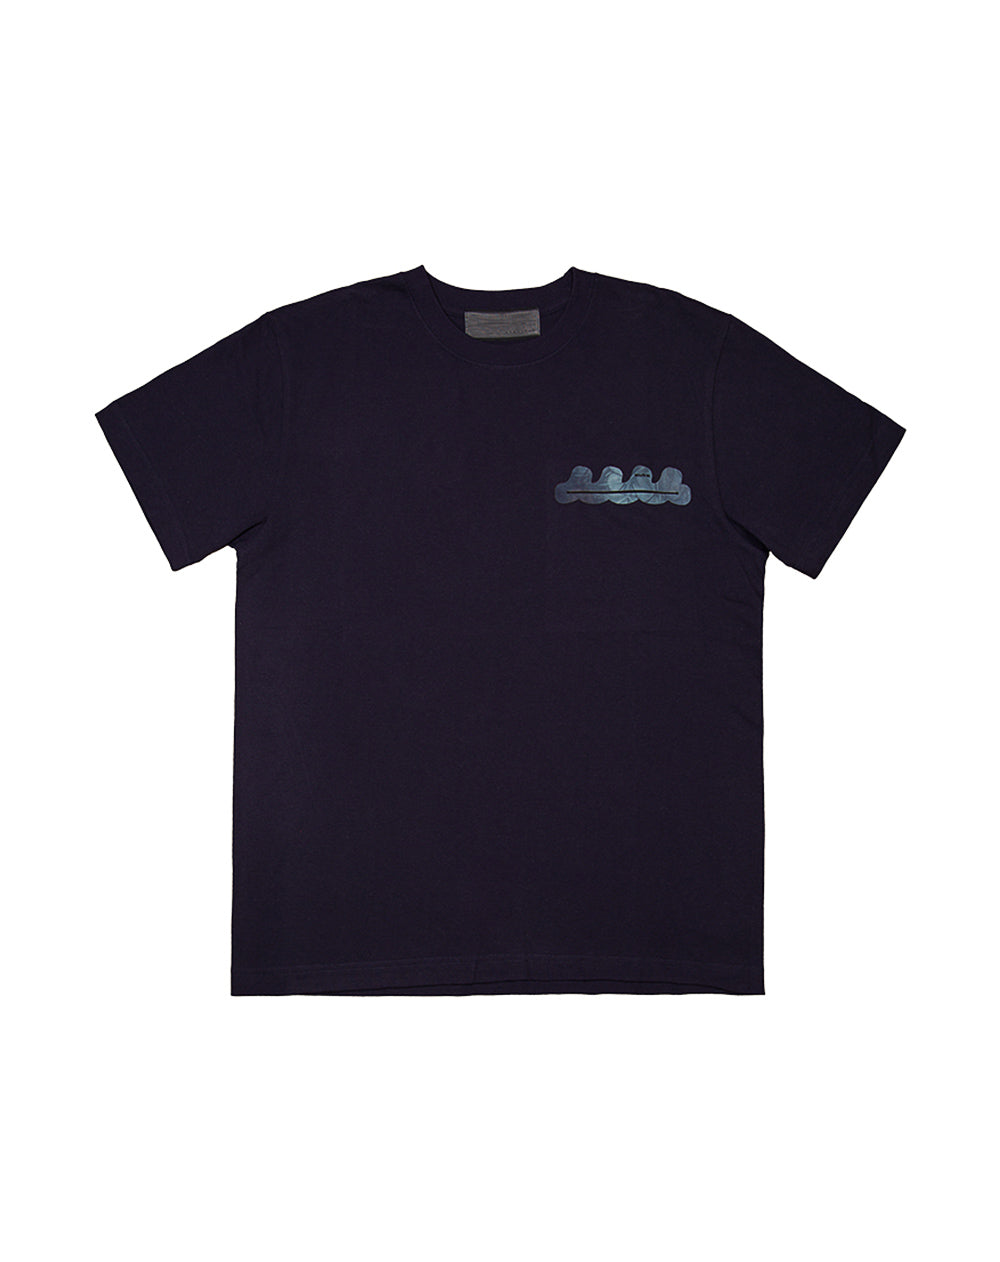 ACANTHUS x muta MARINE TRIMMING POCKET Tシャツ [全4色] – muta 